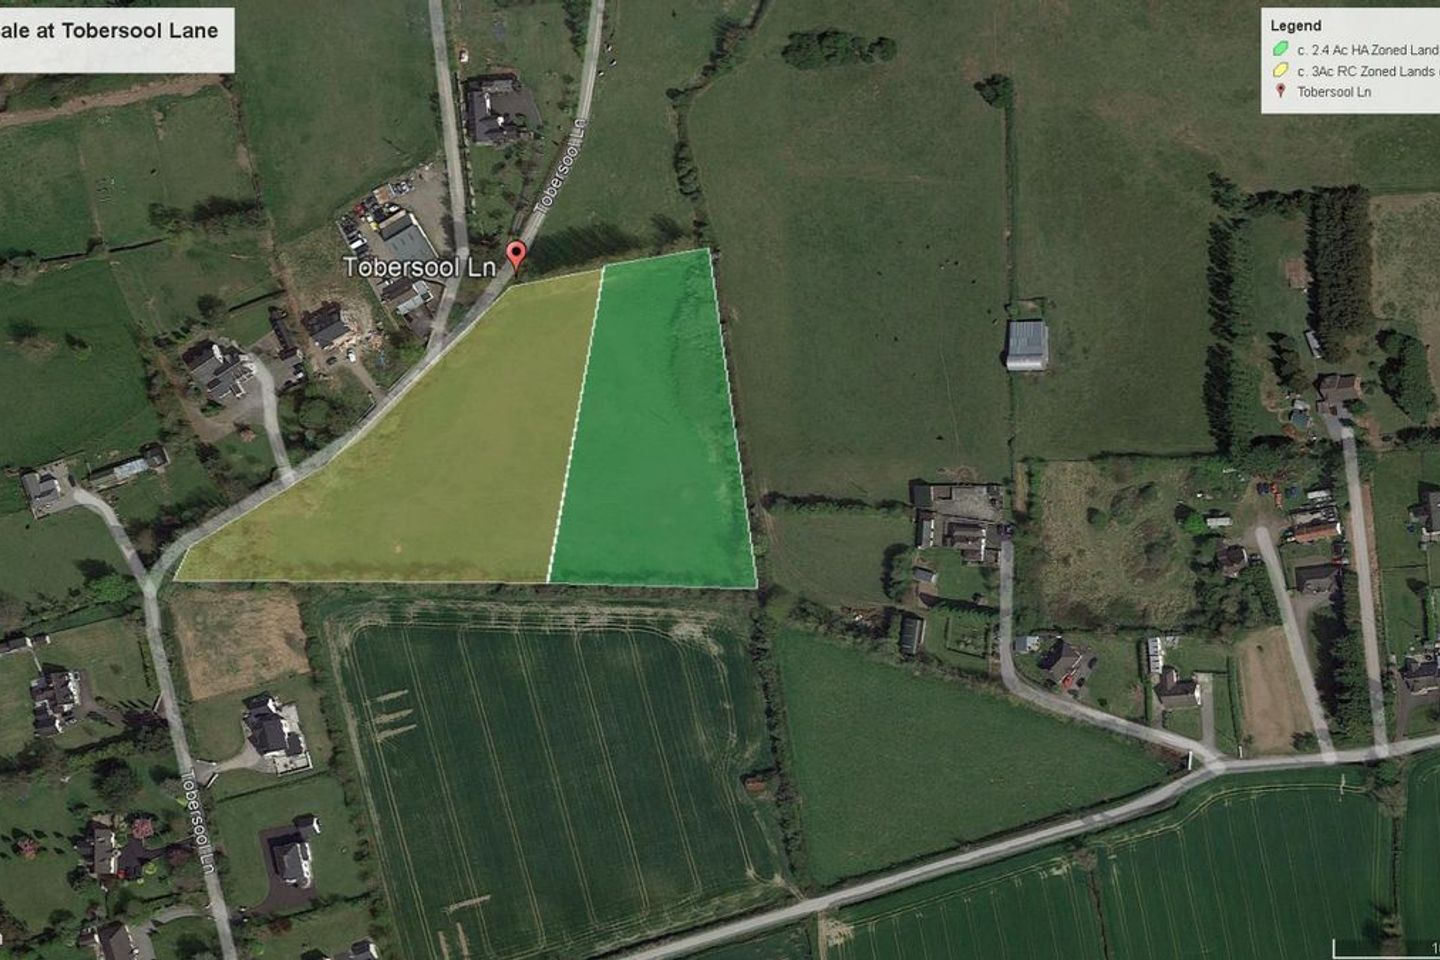 Circa 5.4 acres at Tobersool Lane, Balbriggan, Co. Dublin